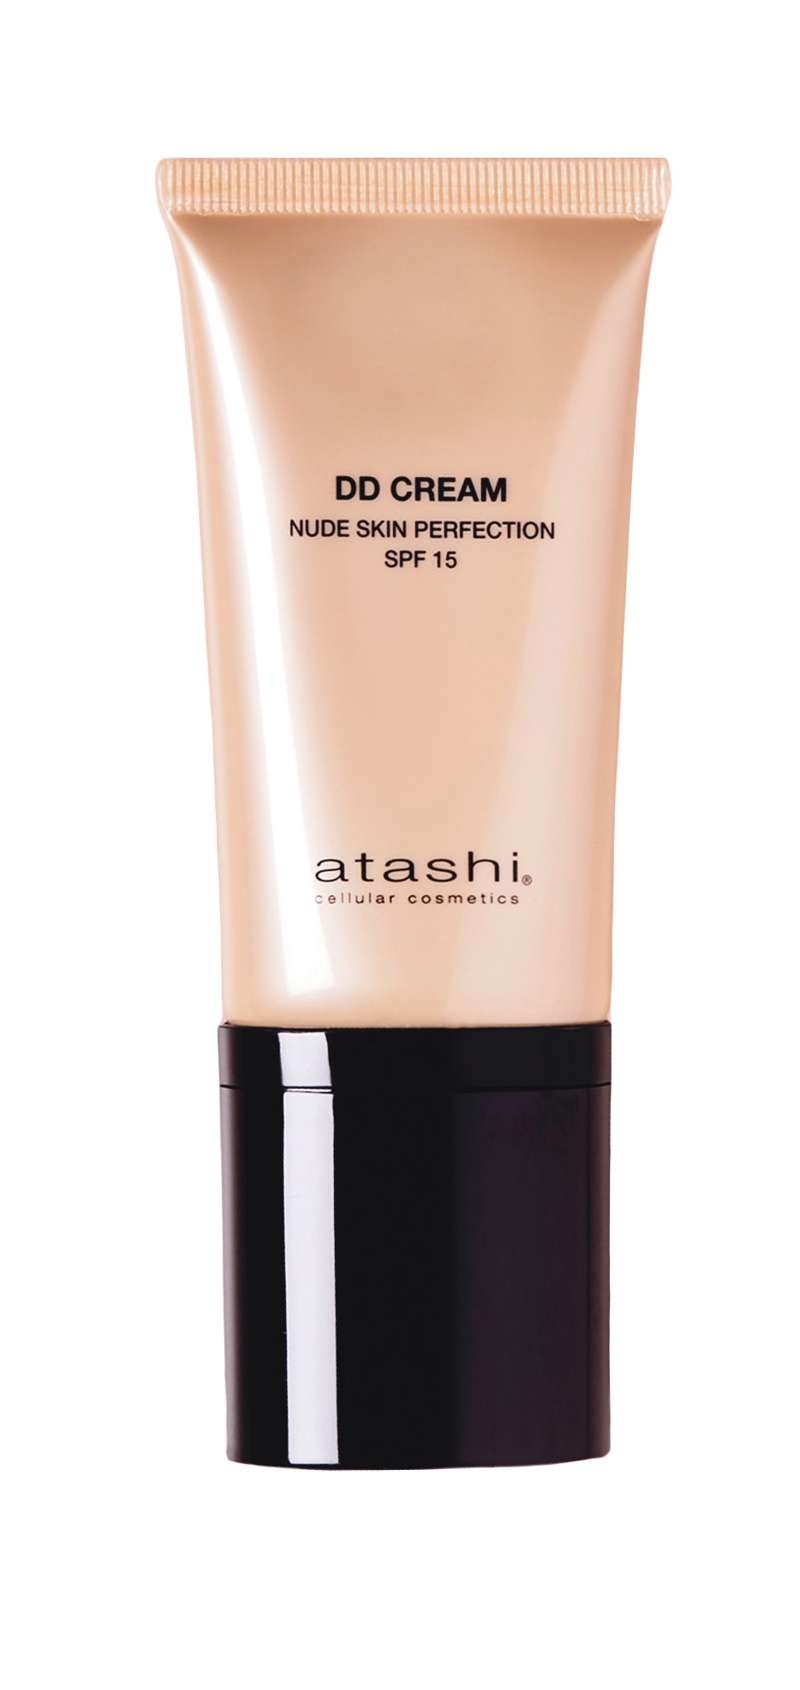 Atashi: DD Cream Nude Skin Perfection SPF 15